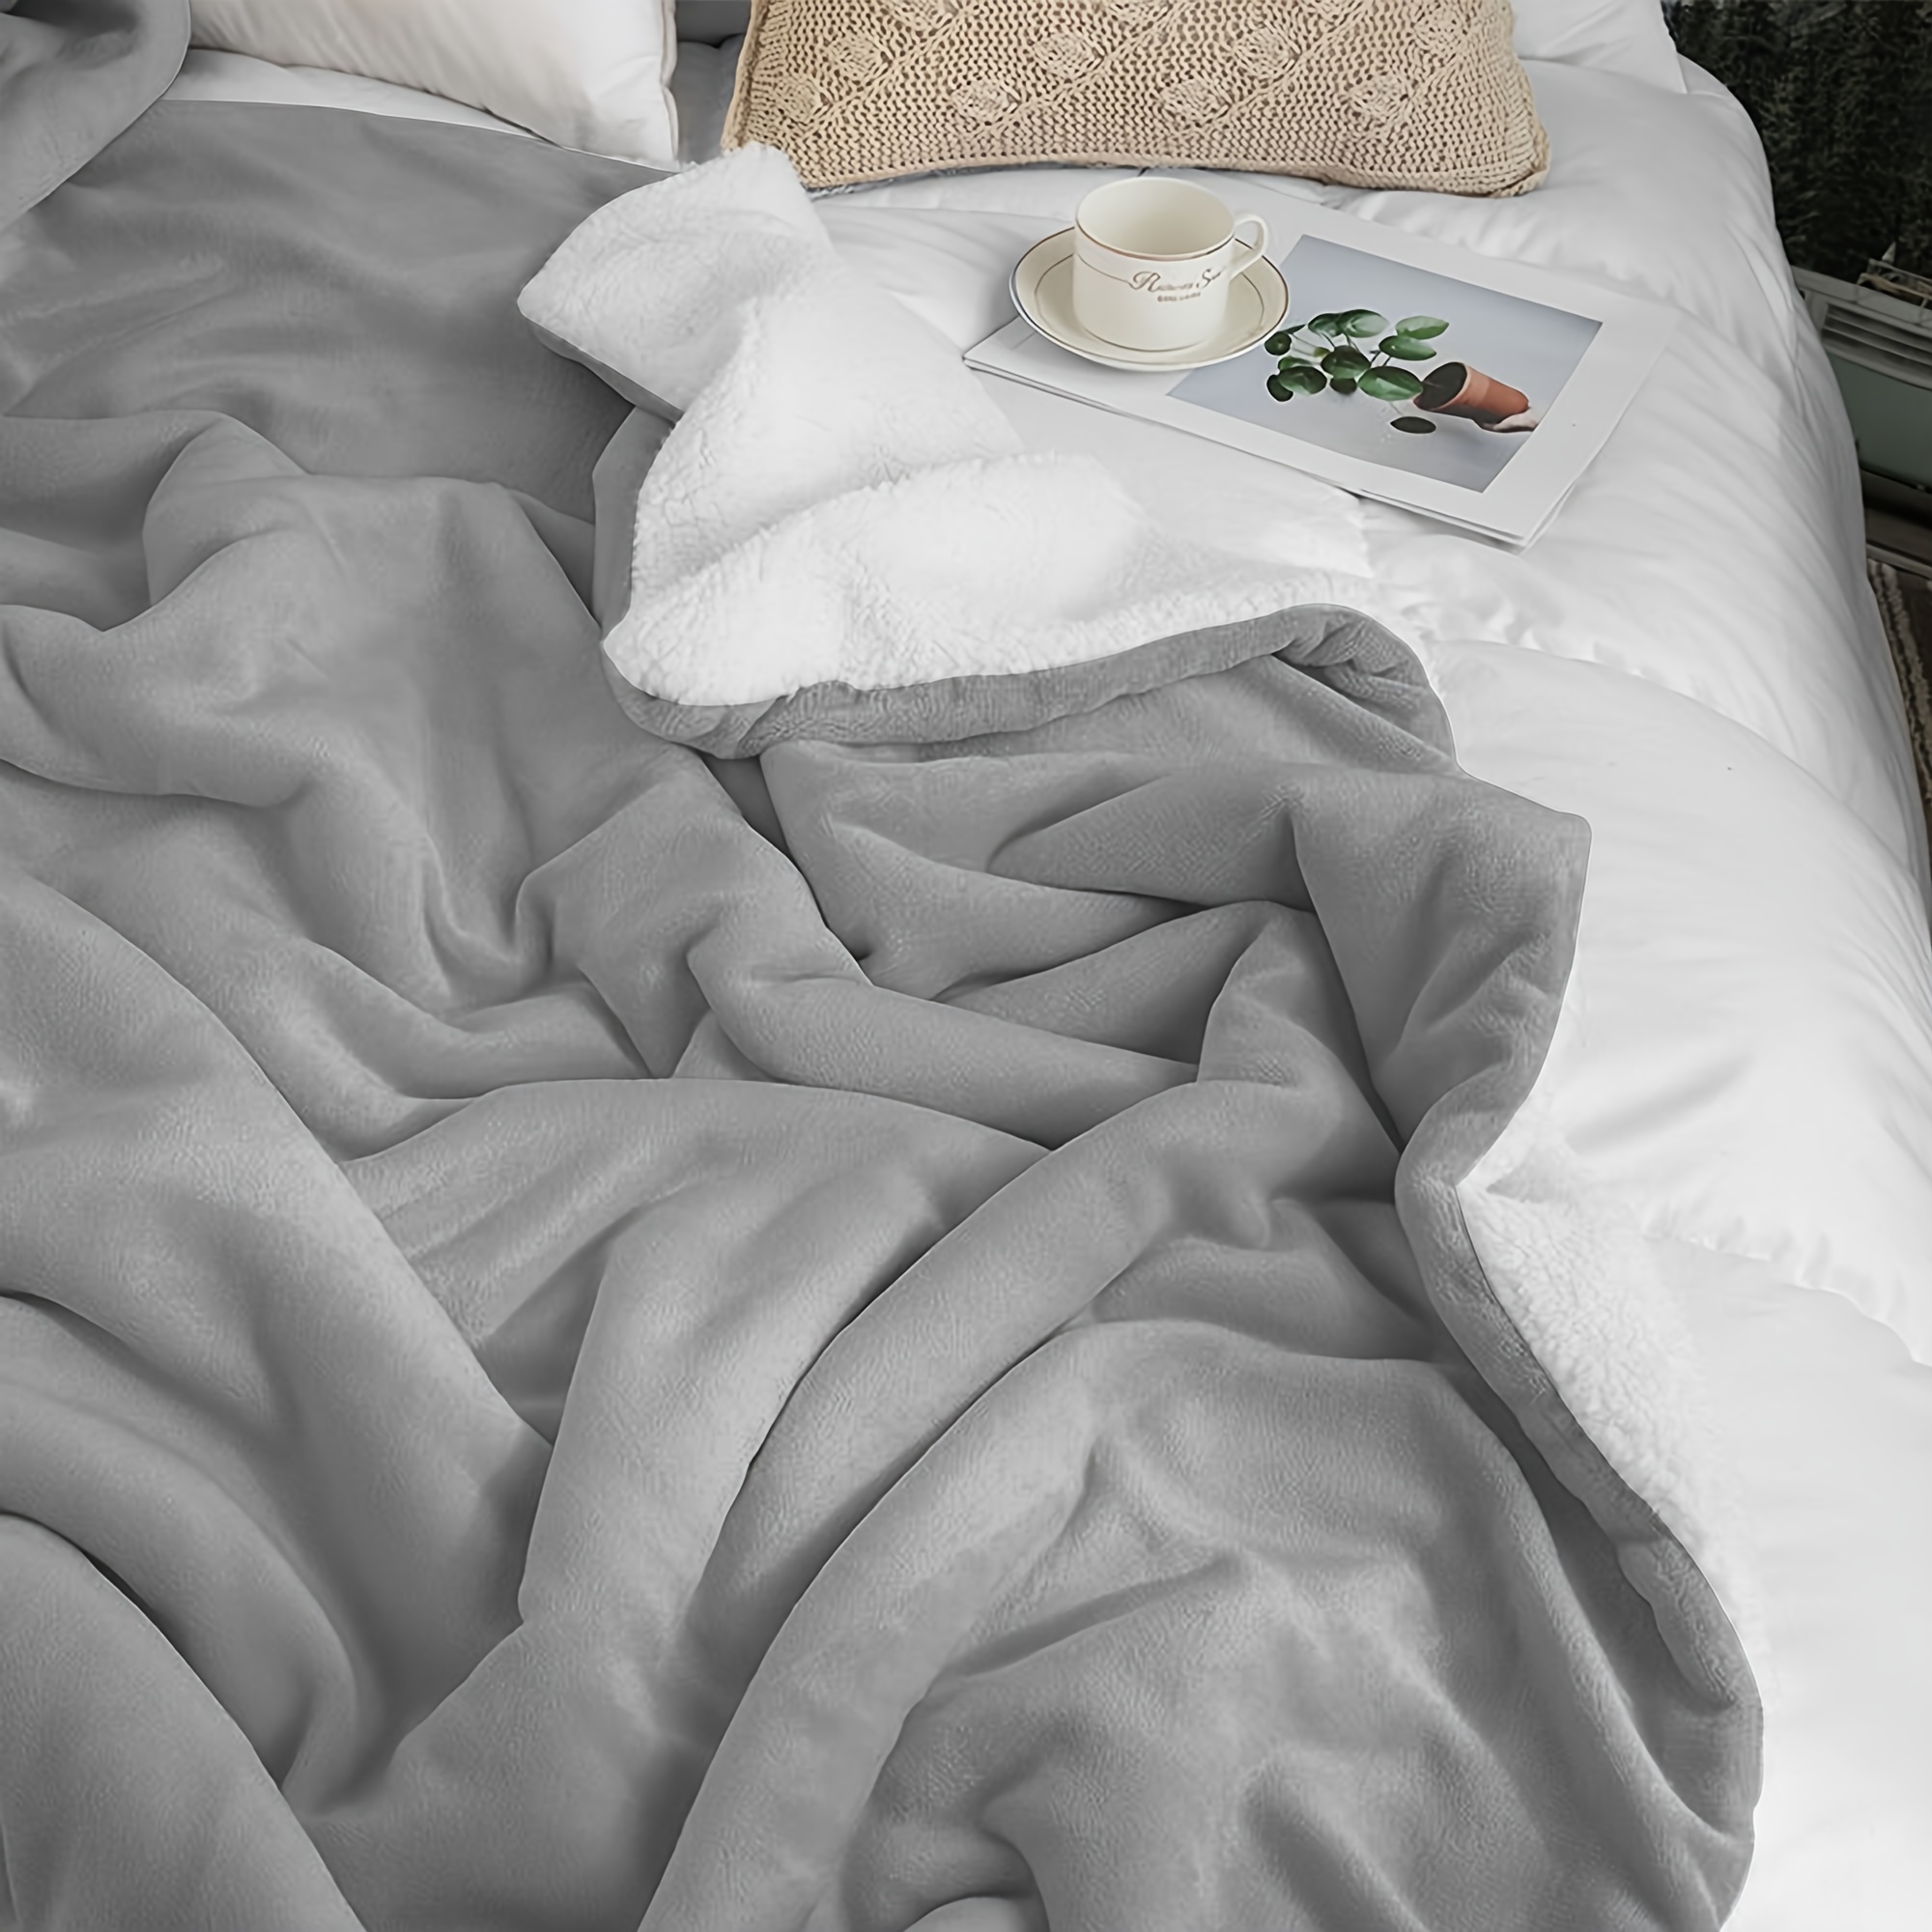 

Fleece Bed Blankets Queen Size - Soft Lightweight Plush Fuzzy Cozy Luxury Blanket Microfiber, 50x60 Inches